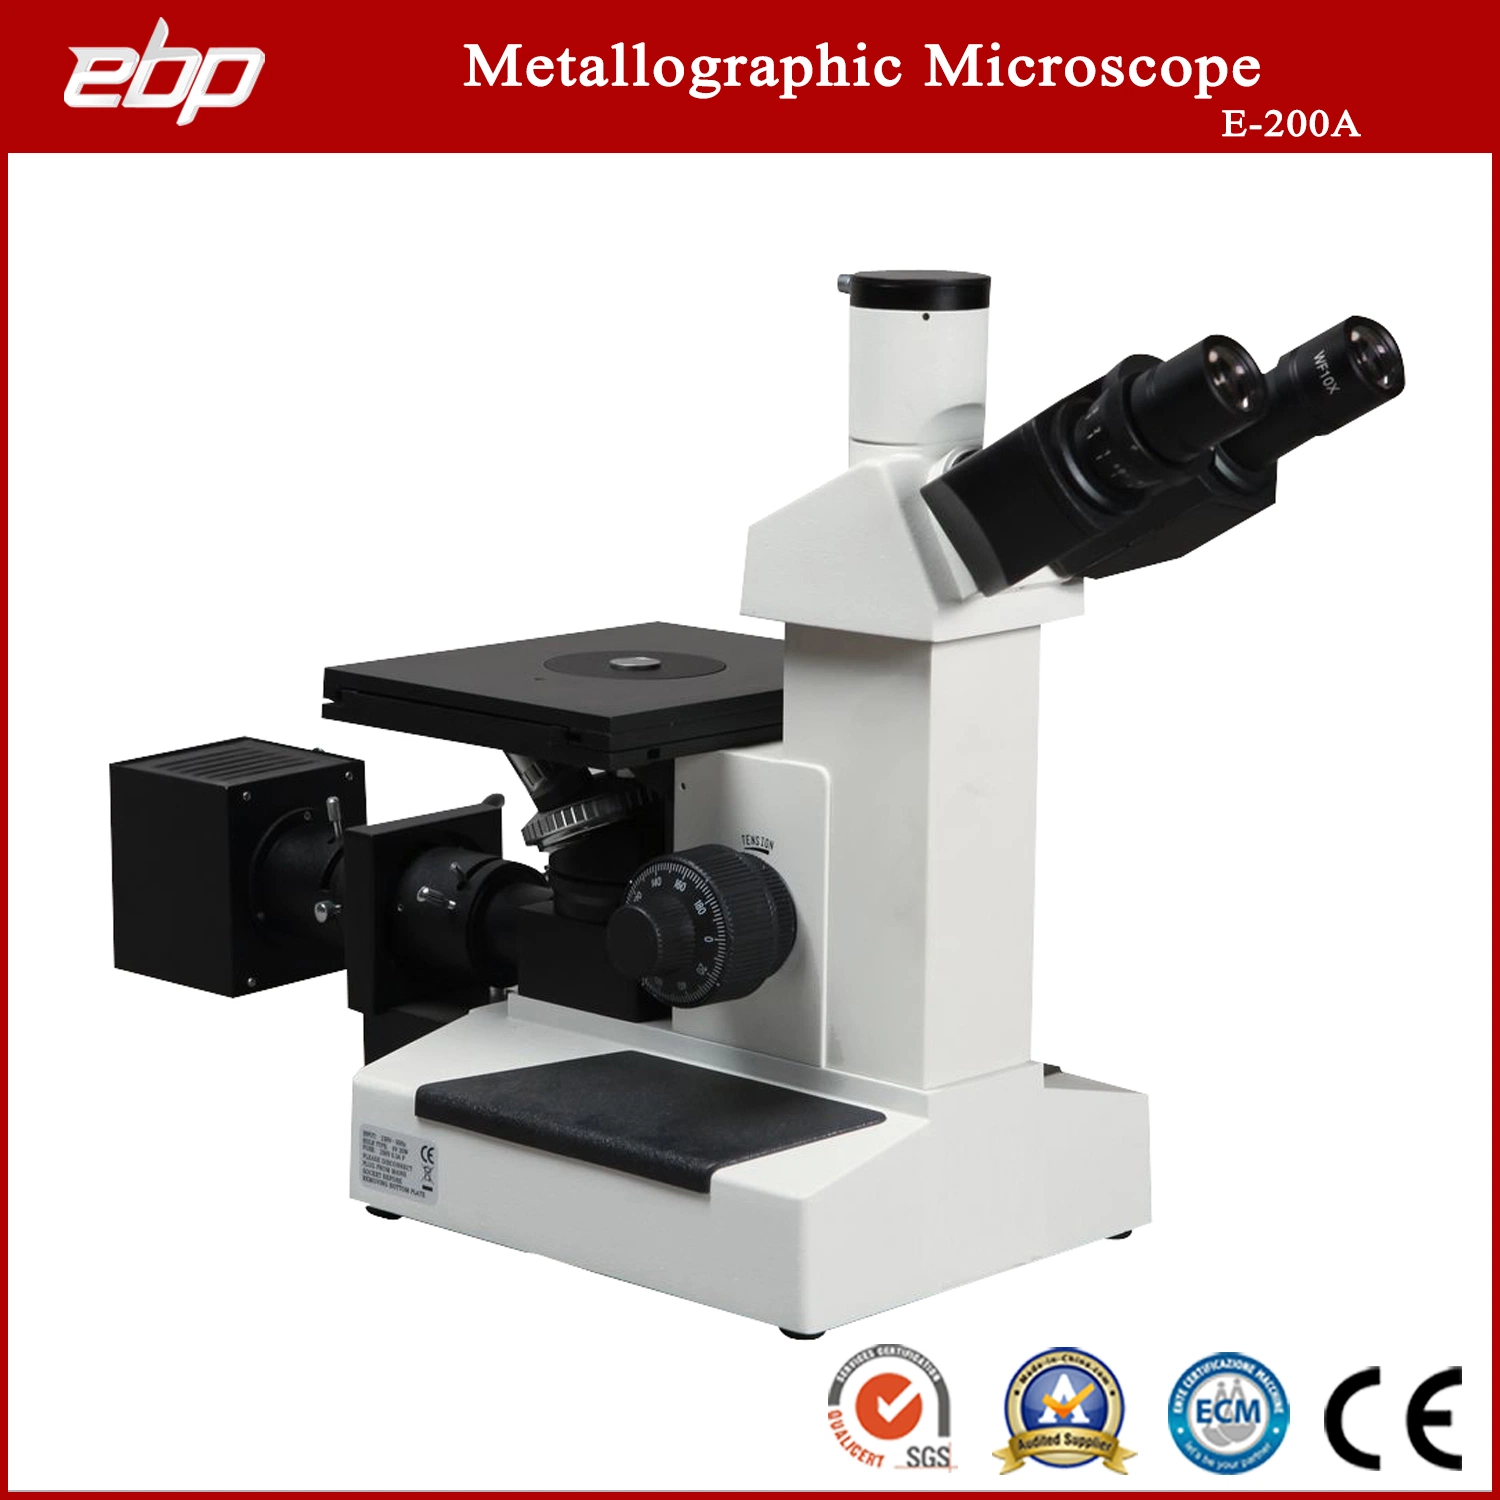 Laboratory Instrument Inverted Metallurgical Microscopes Support Microscope Camera